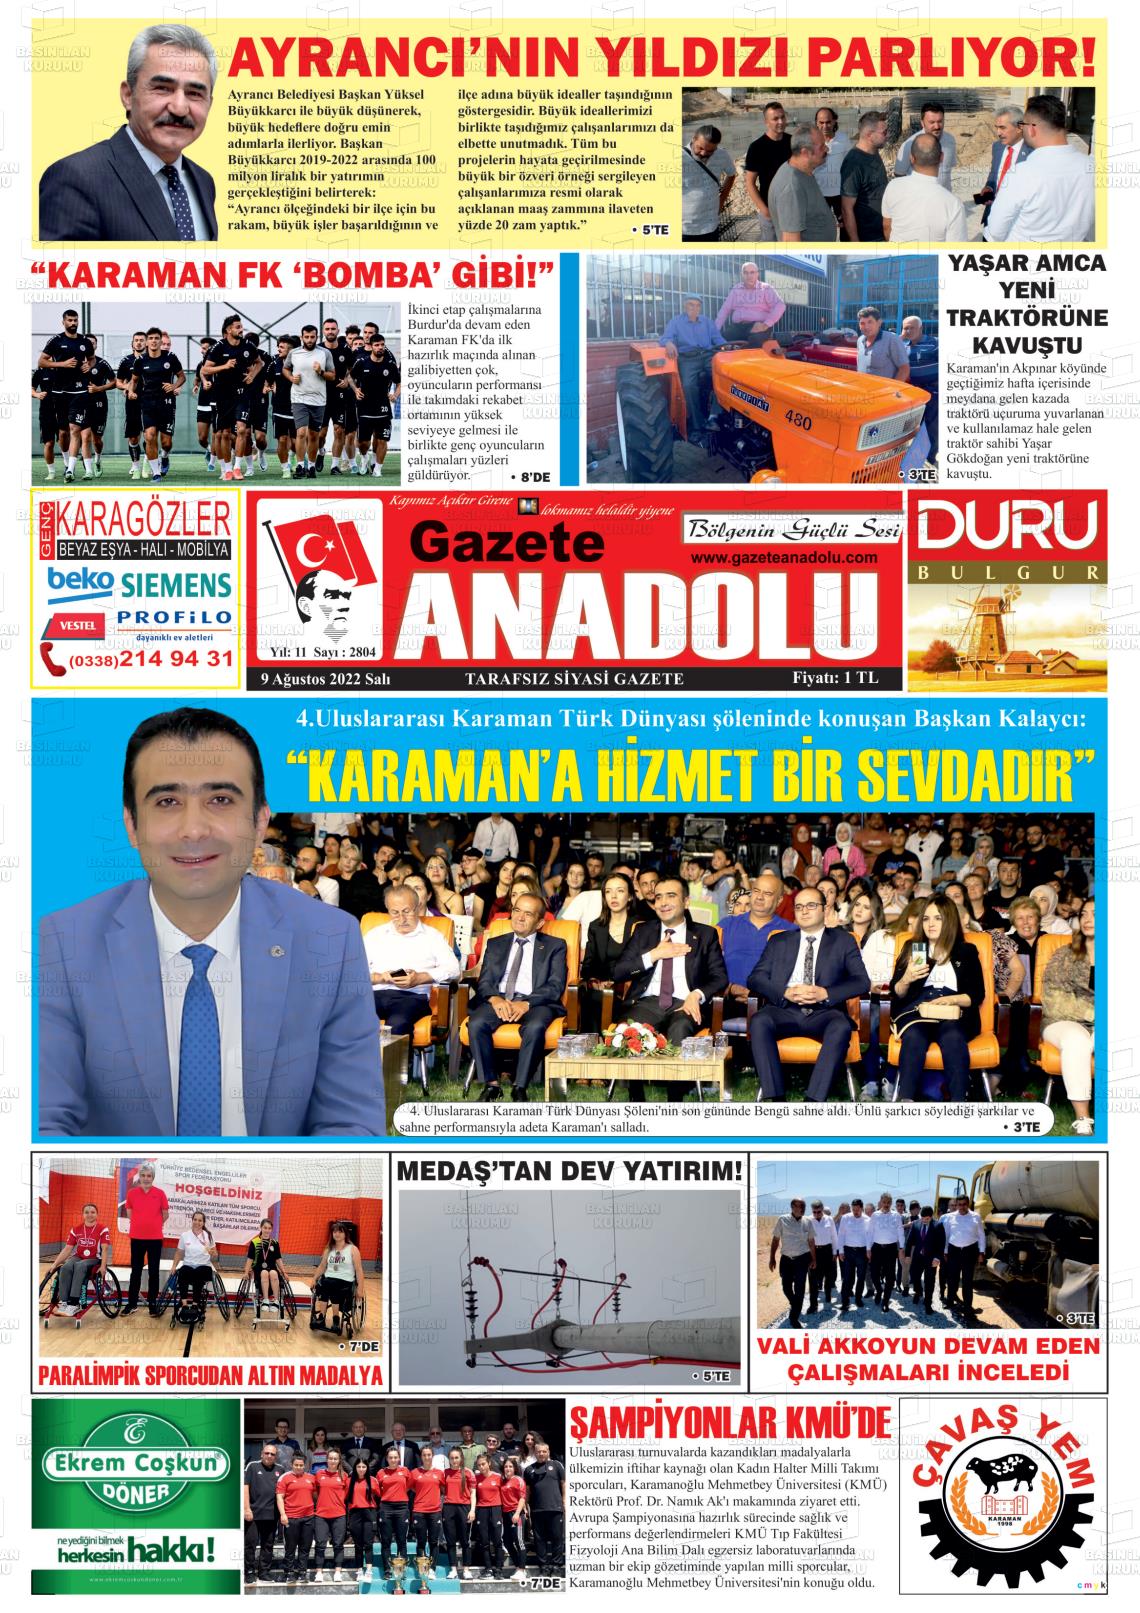 09 Ağustos 2022 Gazete Anadolu Gazete Manşeti